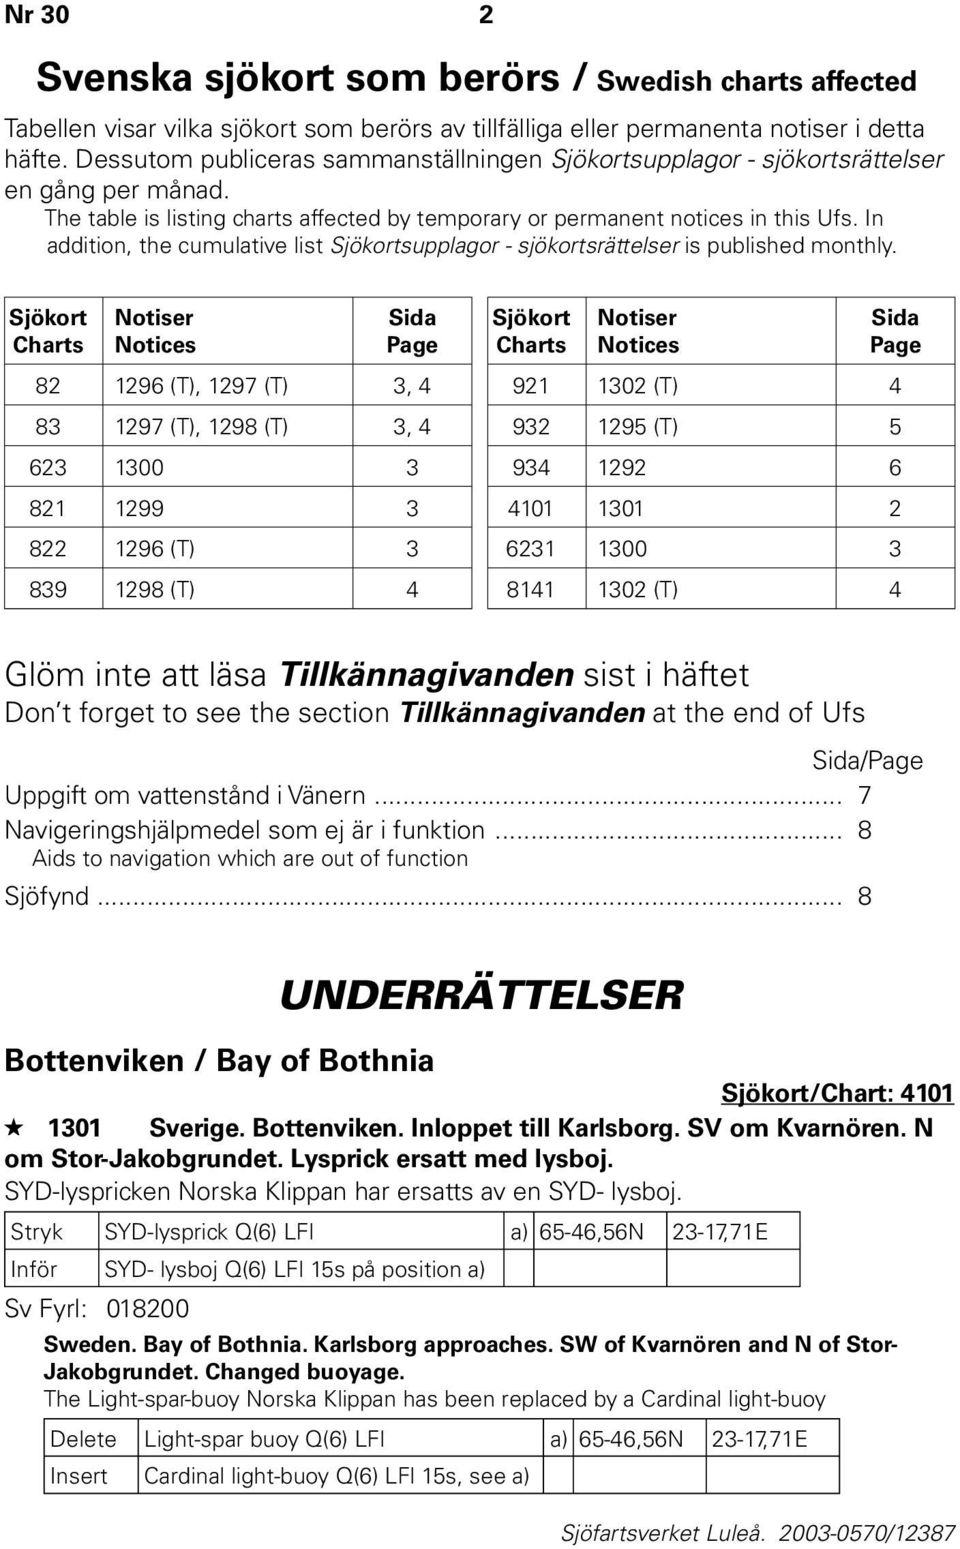 In addition, the cumulative list Sjökortsupplagor - sjökortsrättelser is published monthly.